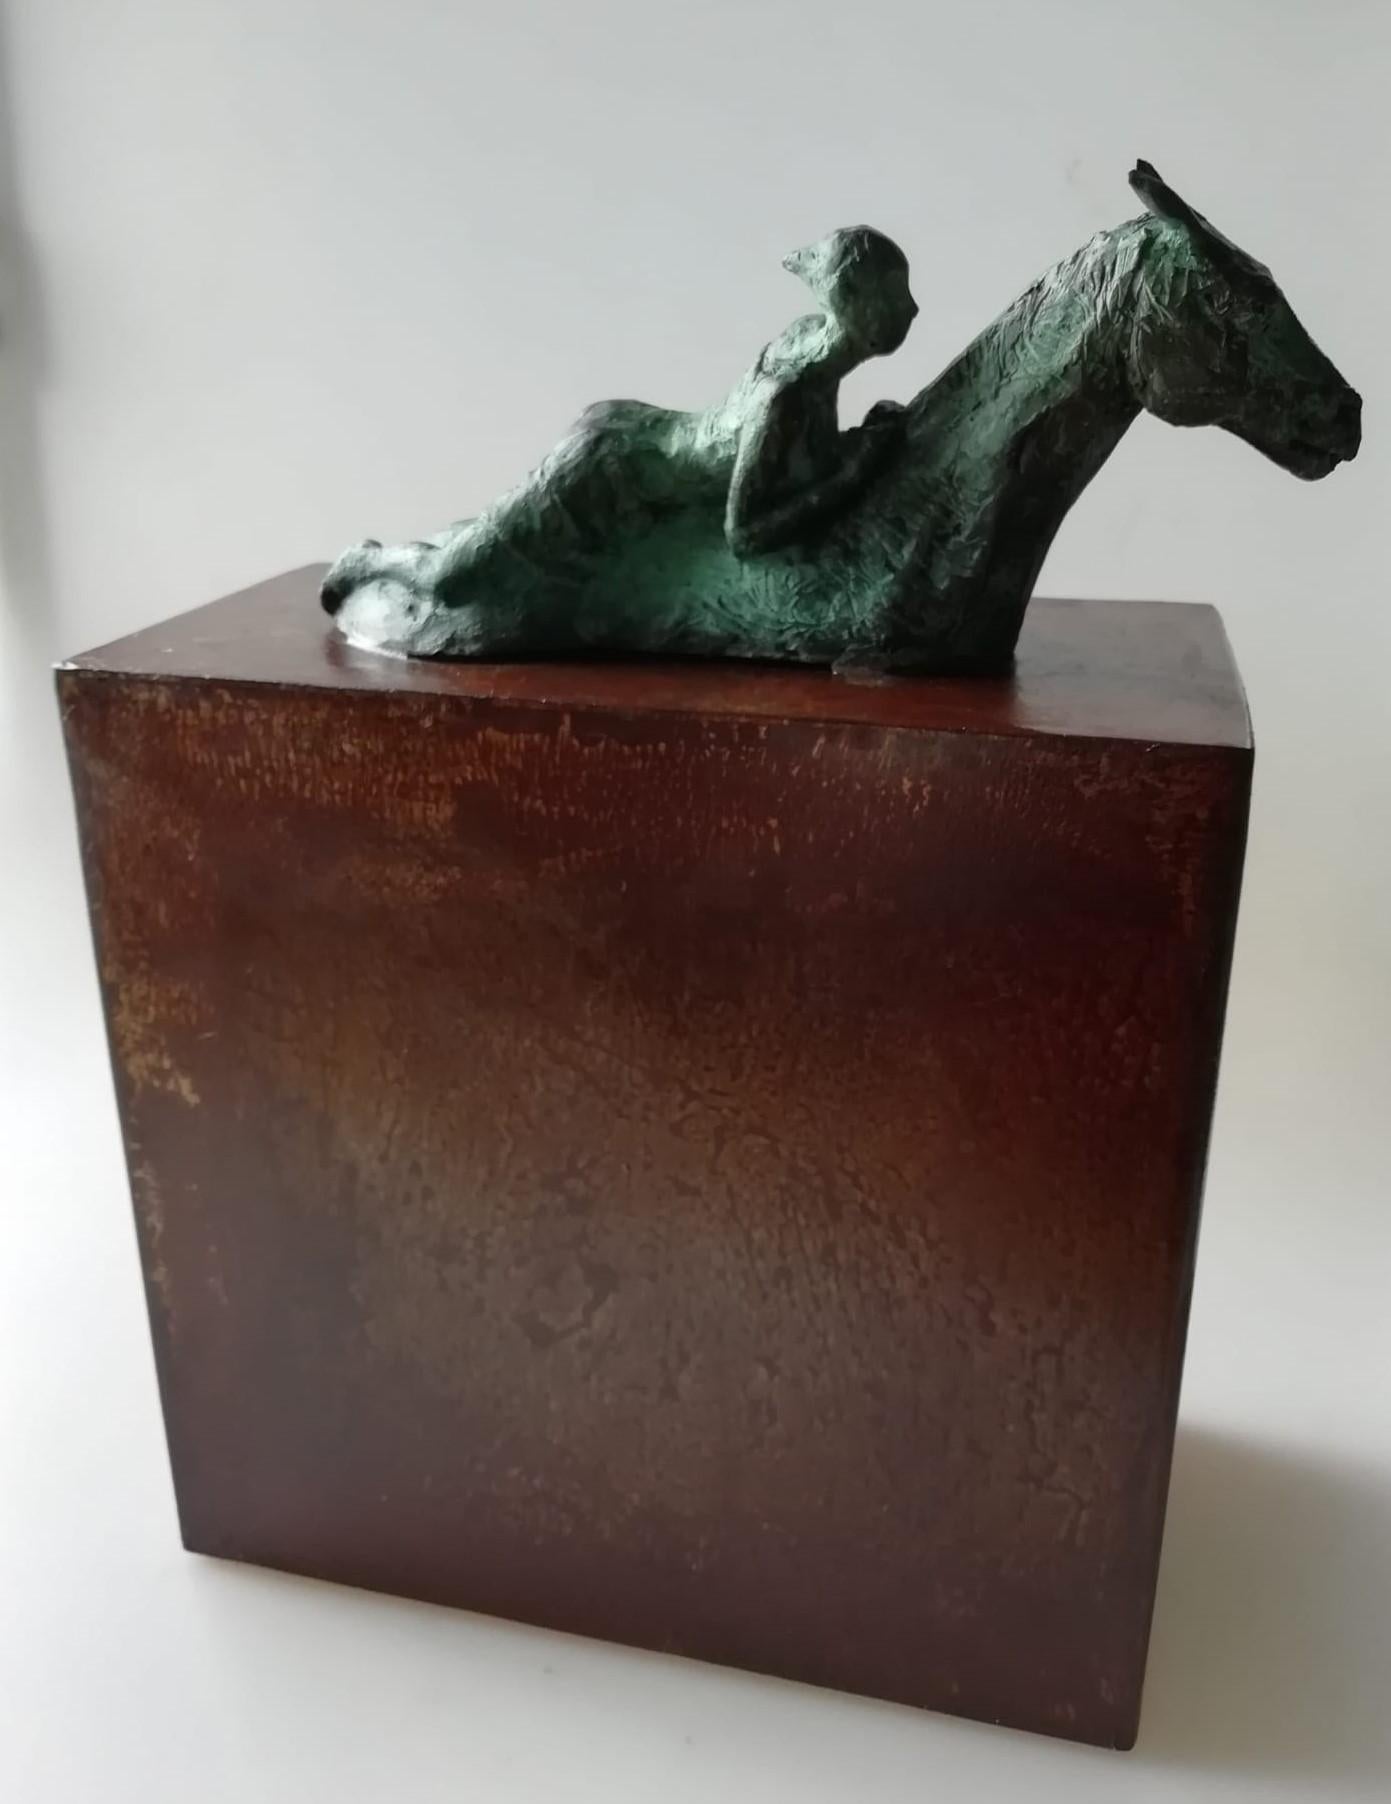 Joan Artigas Planas Figurative Sculpture - "Crossing the River " contemporary bronze table sculpture girl love horse animal